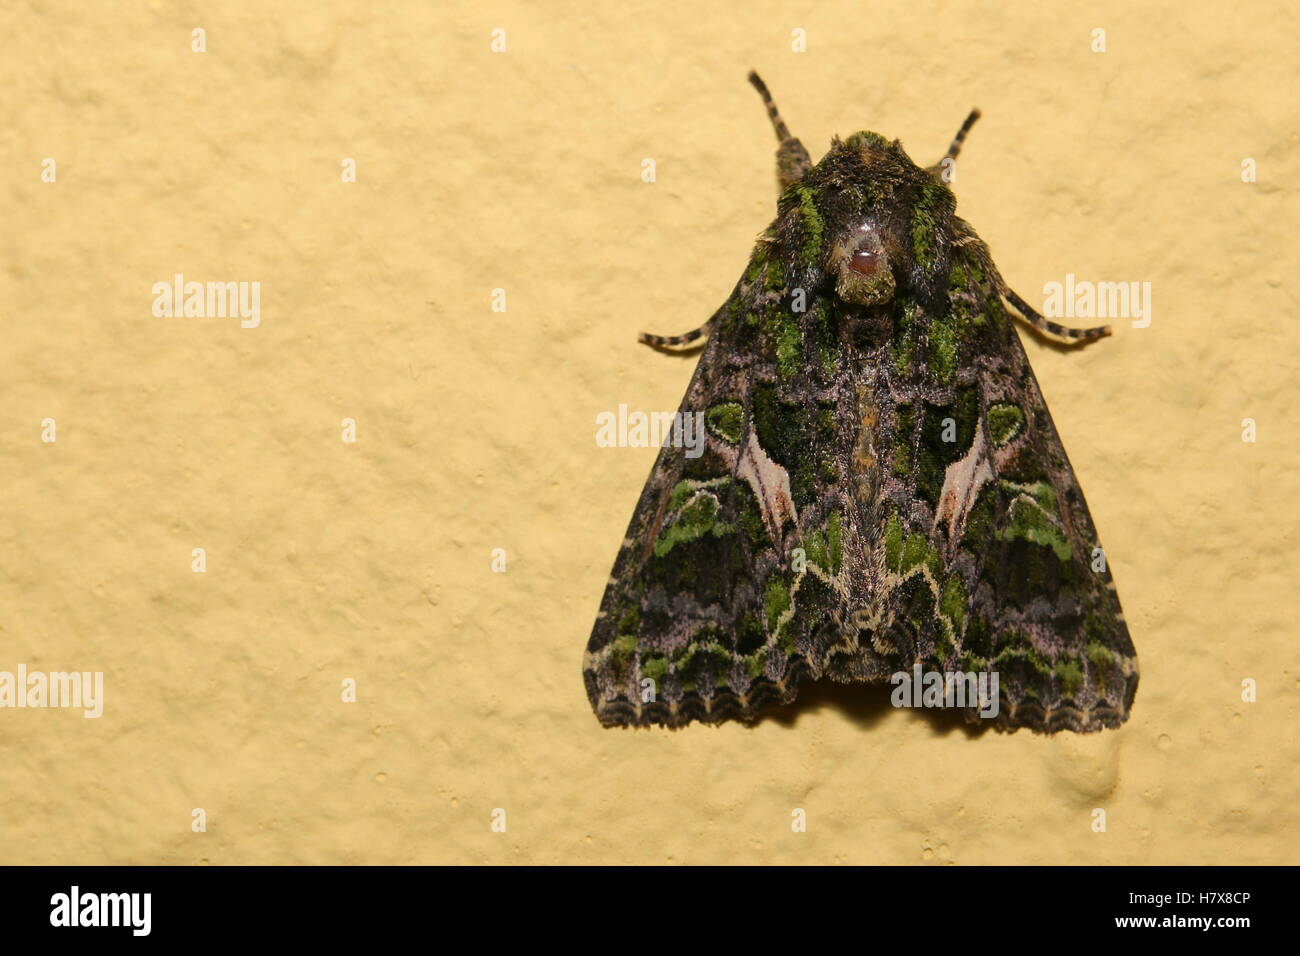 Orache Moth (Trachea atriplicis) sitting on the wall. Stock Photo